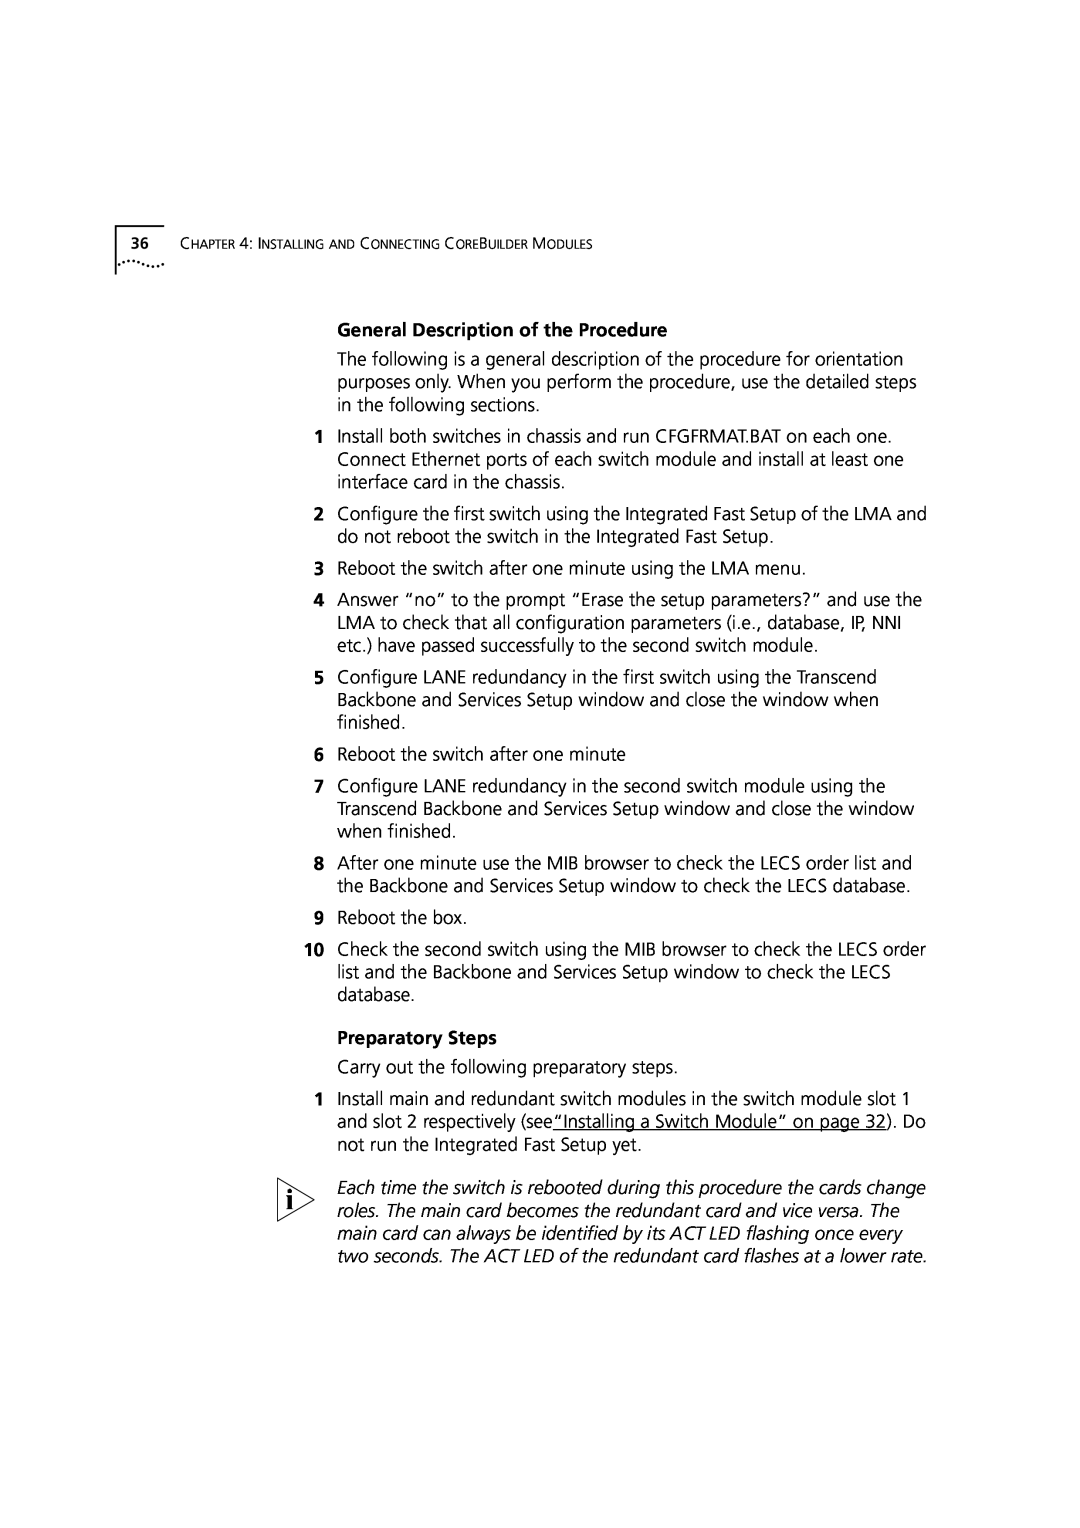 3Com 7000 manual General Description of the Procedure, Preparatory Steps 